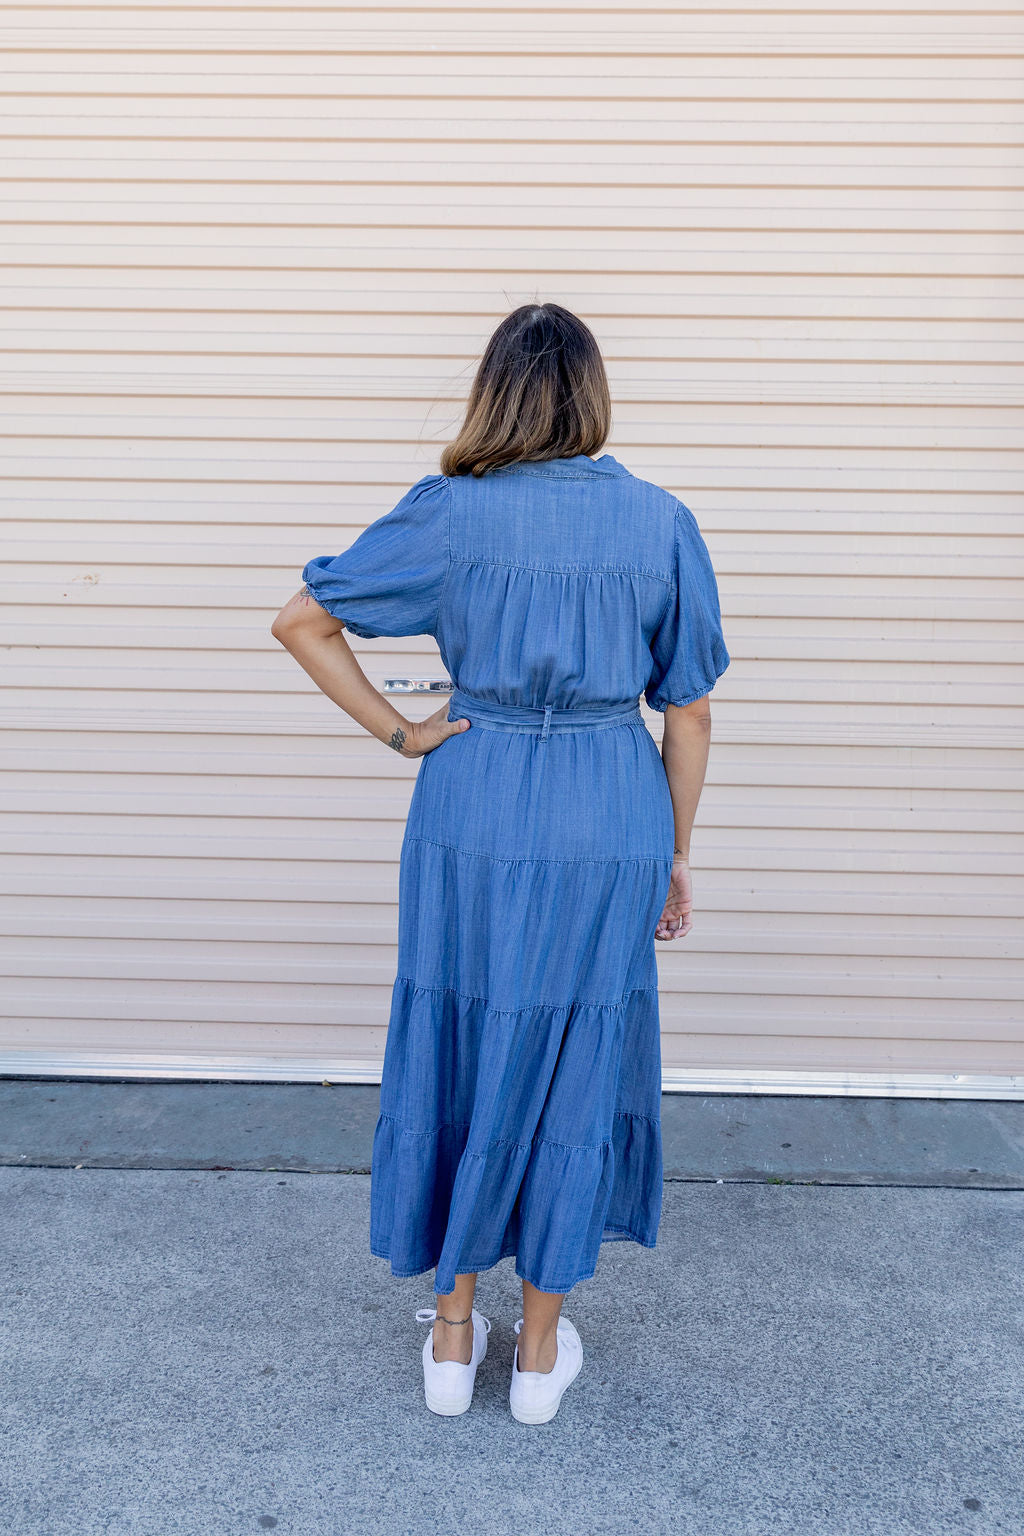 Venus Blue Denim Look Dress – Proud Poppy Clothing